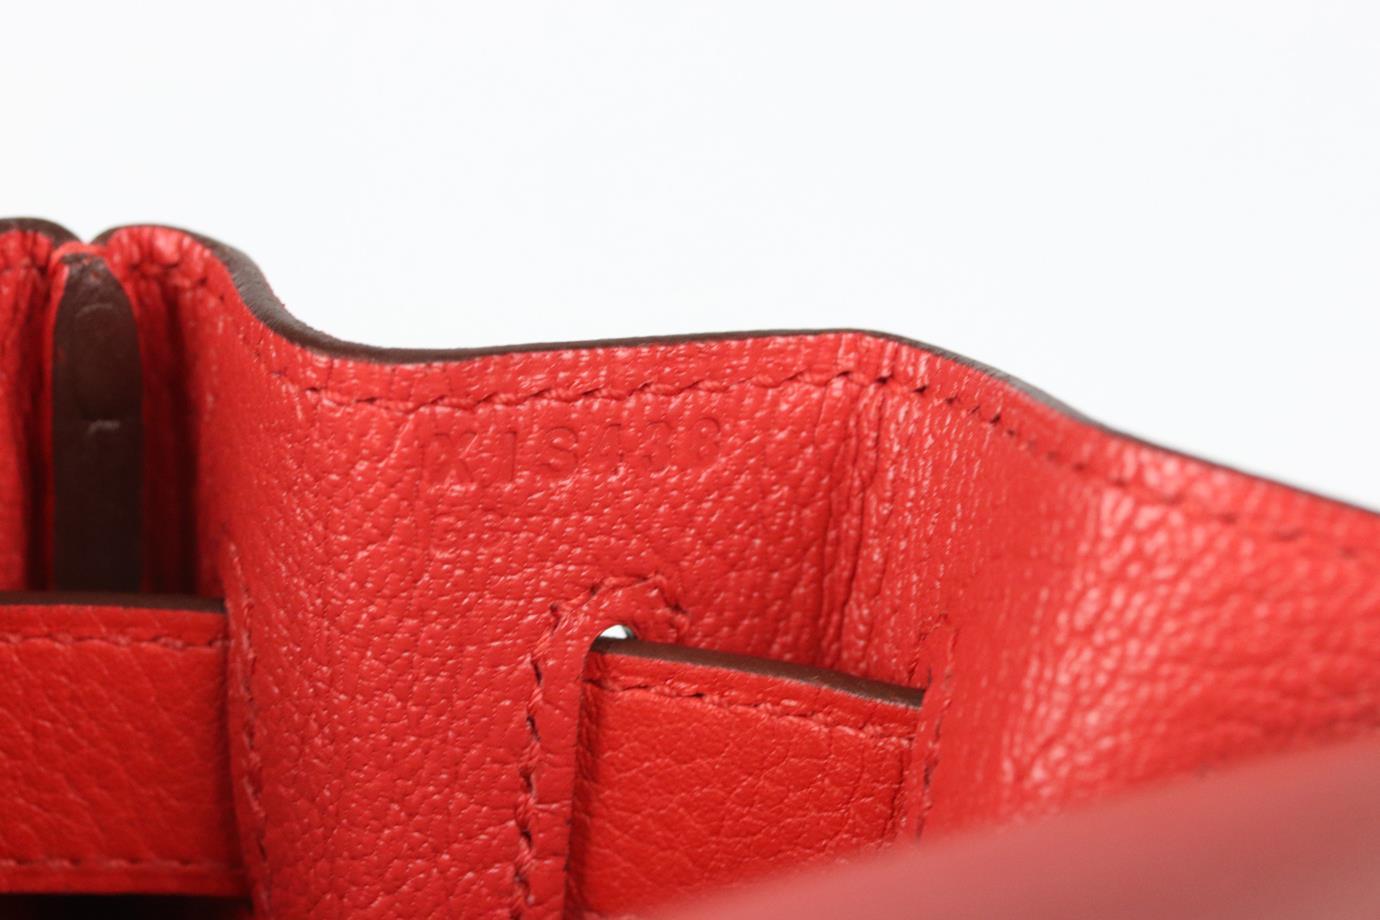 Hermès 2016 Kelly Retourne 28cm Evergrain Leather Bag For Sale 7